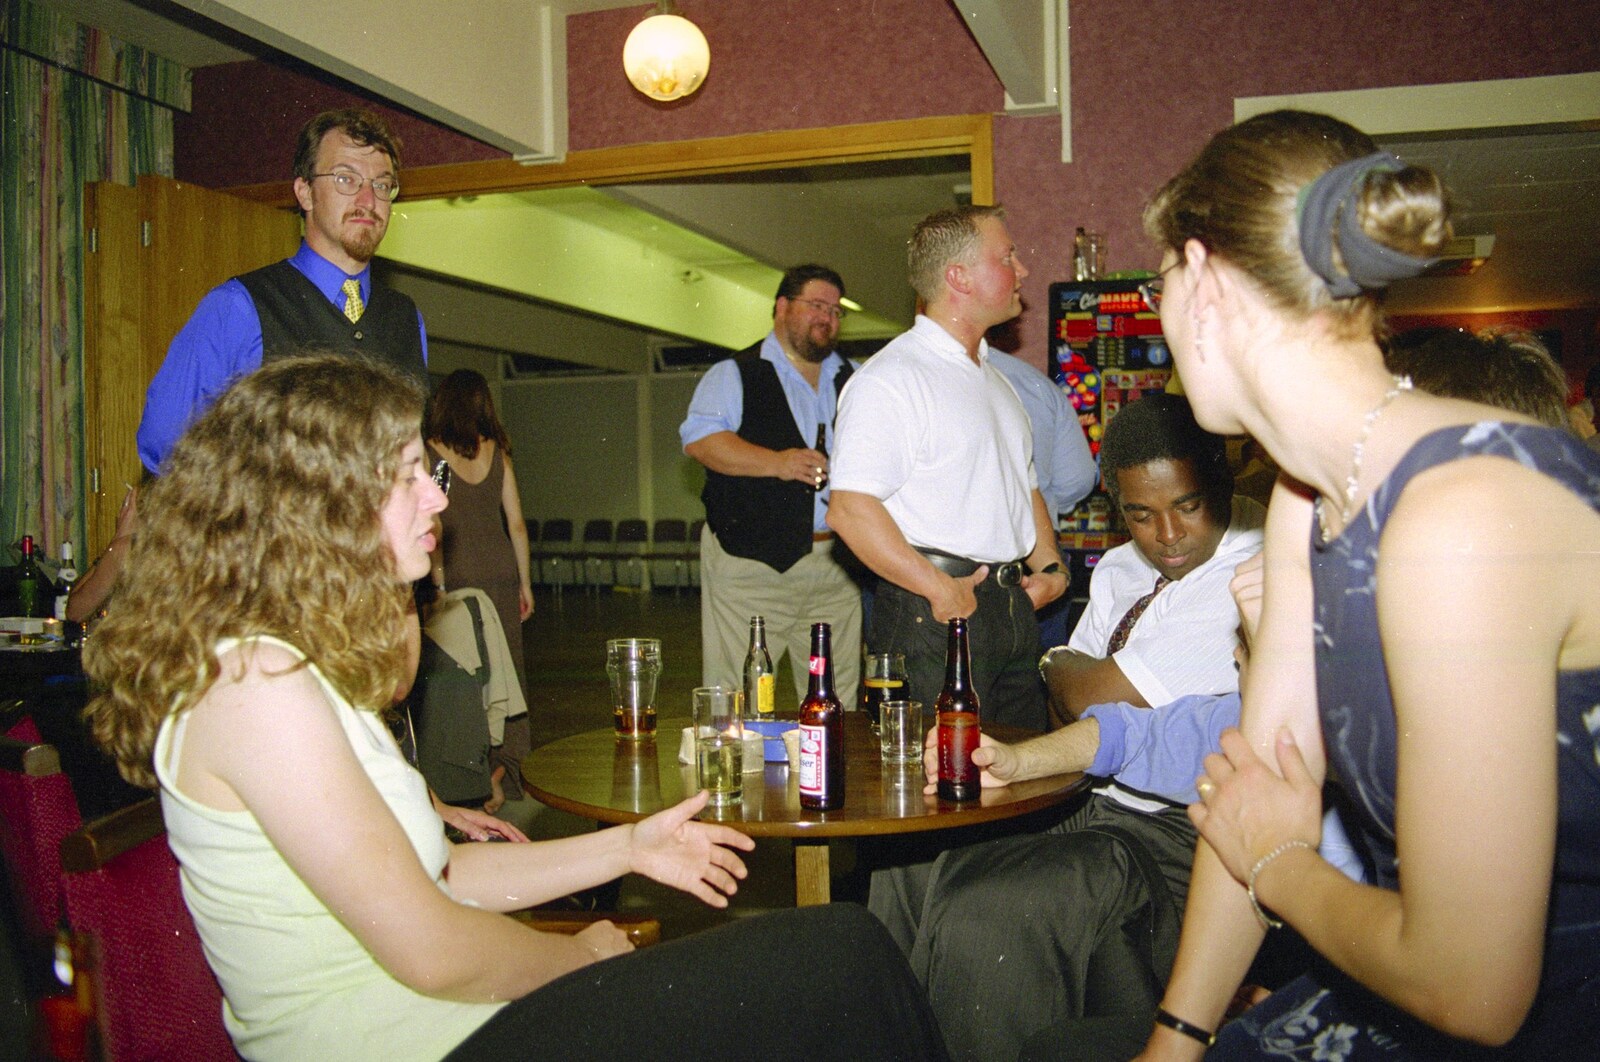 Phil roams around looking surprised from Joe and Lesley's CISU Wedding, Ipswich, Suffolk - 30th July 1998